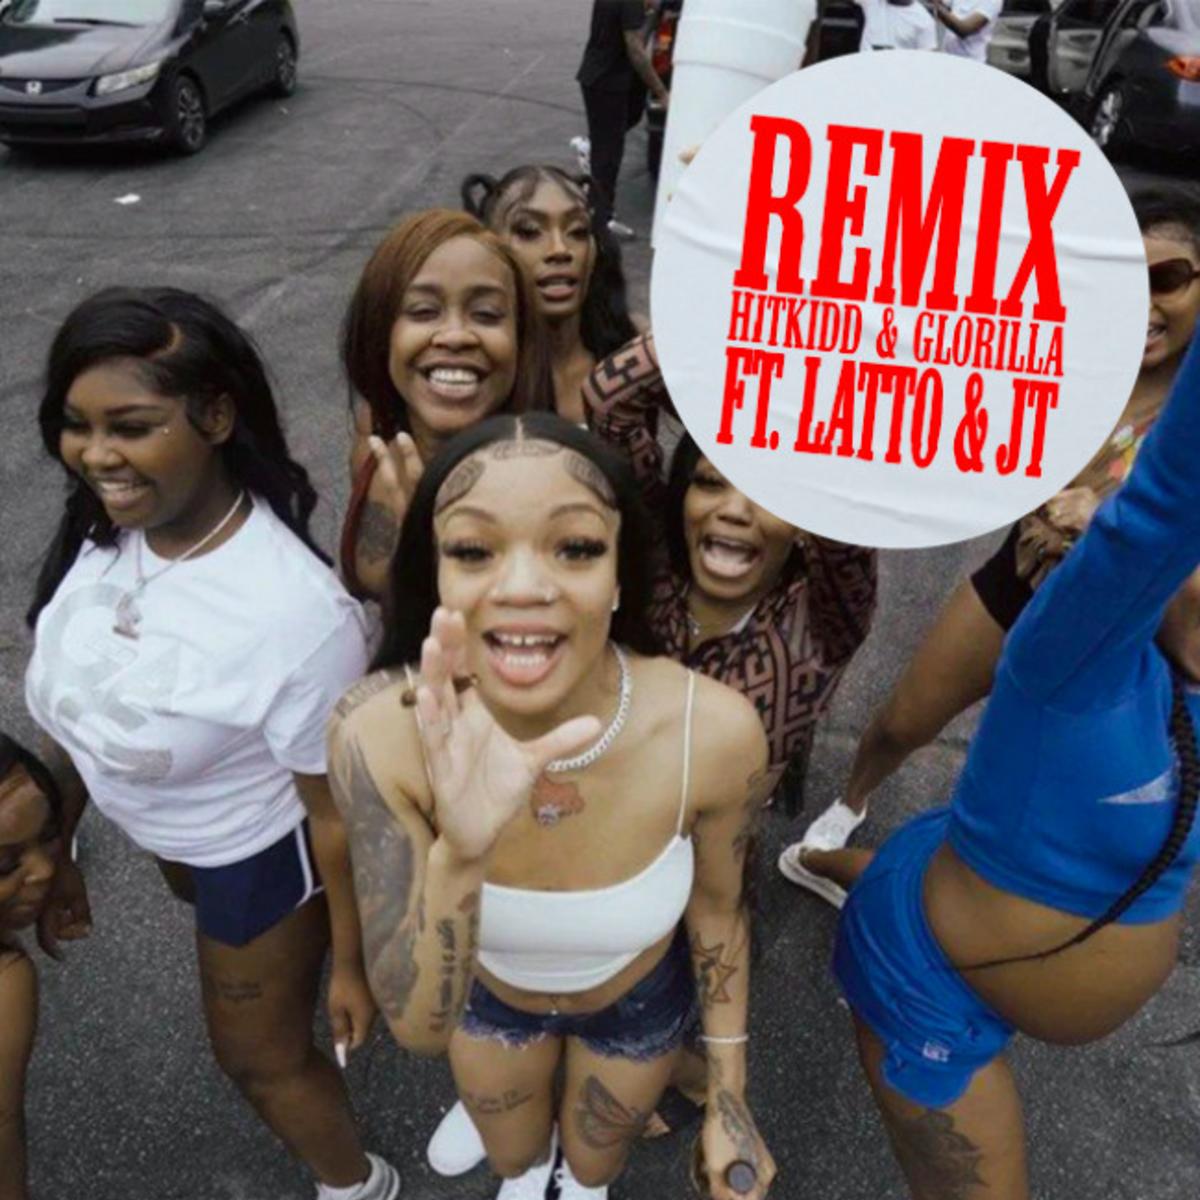 Glorilla Hitkidd Feat. JT Latto F.N.F Lets Go Remix